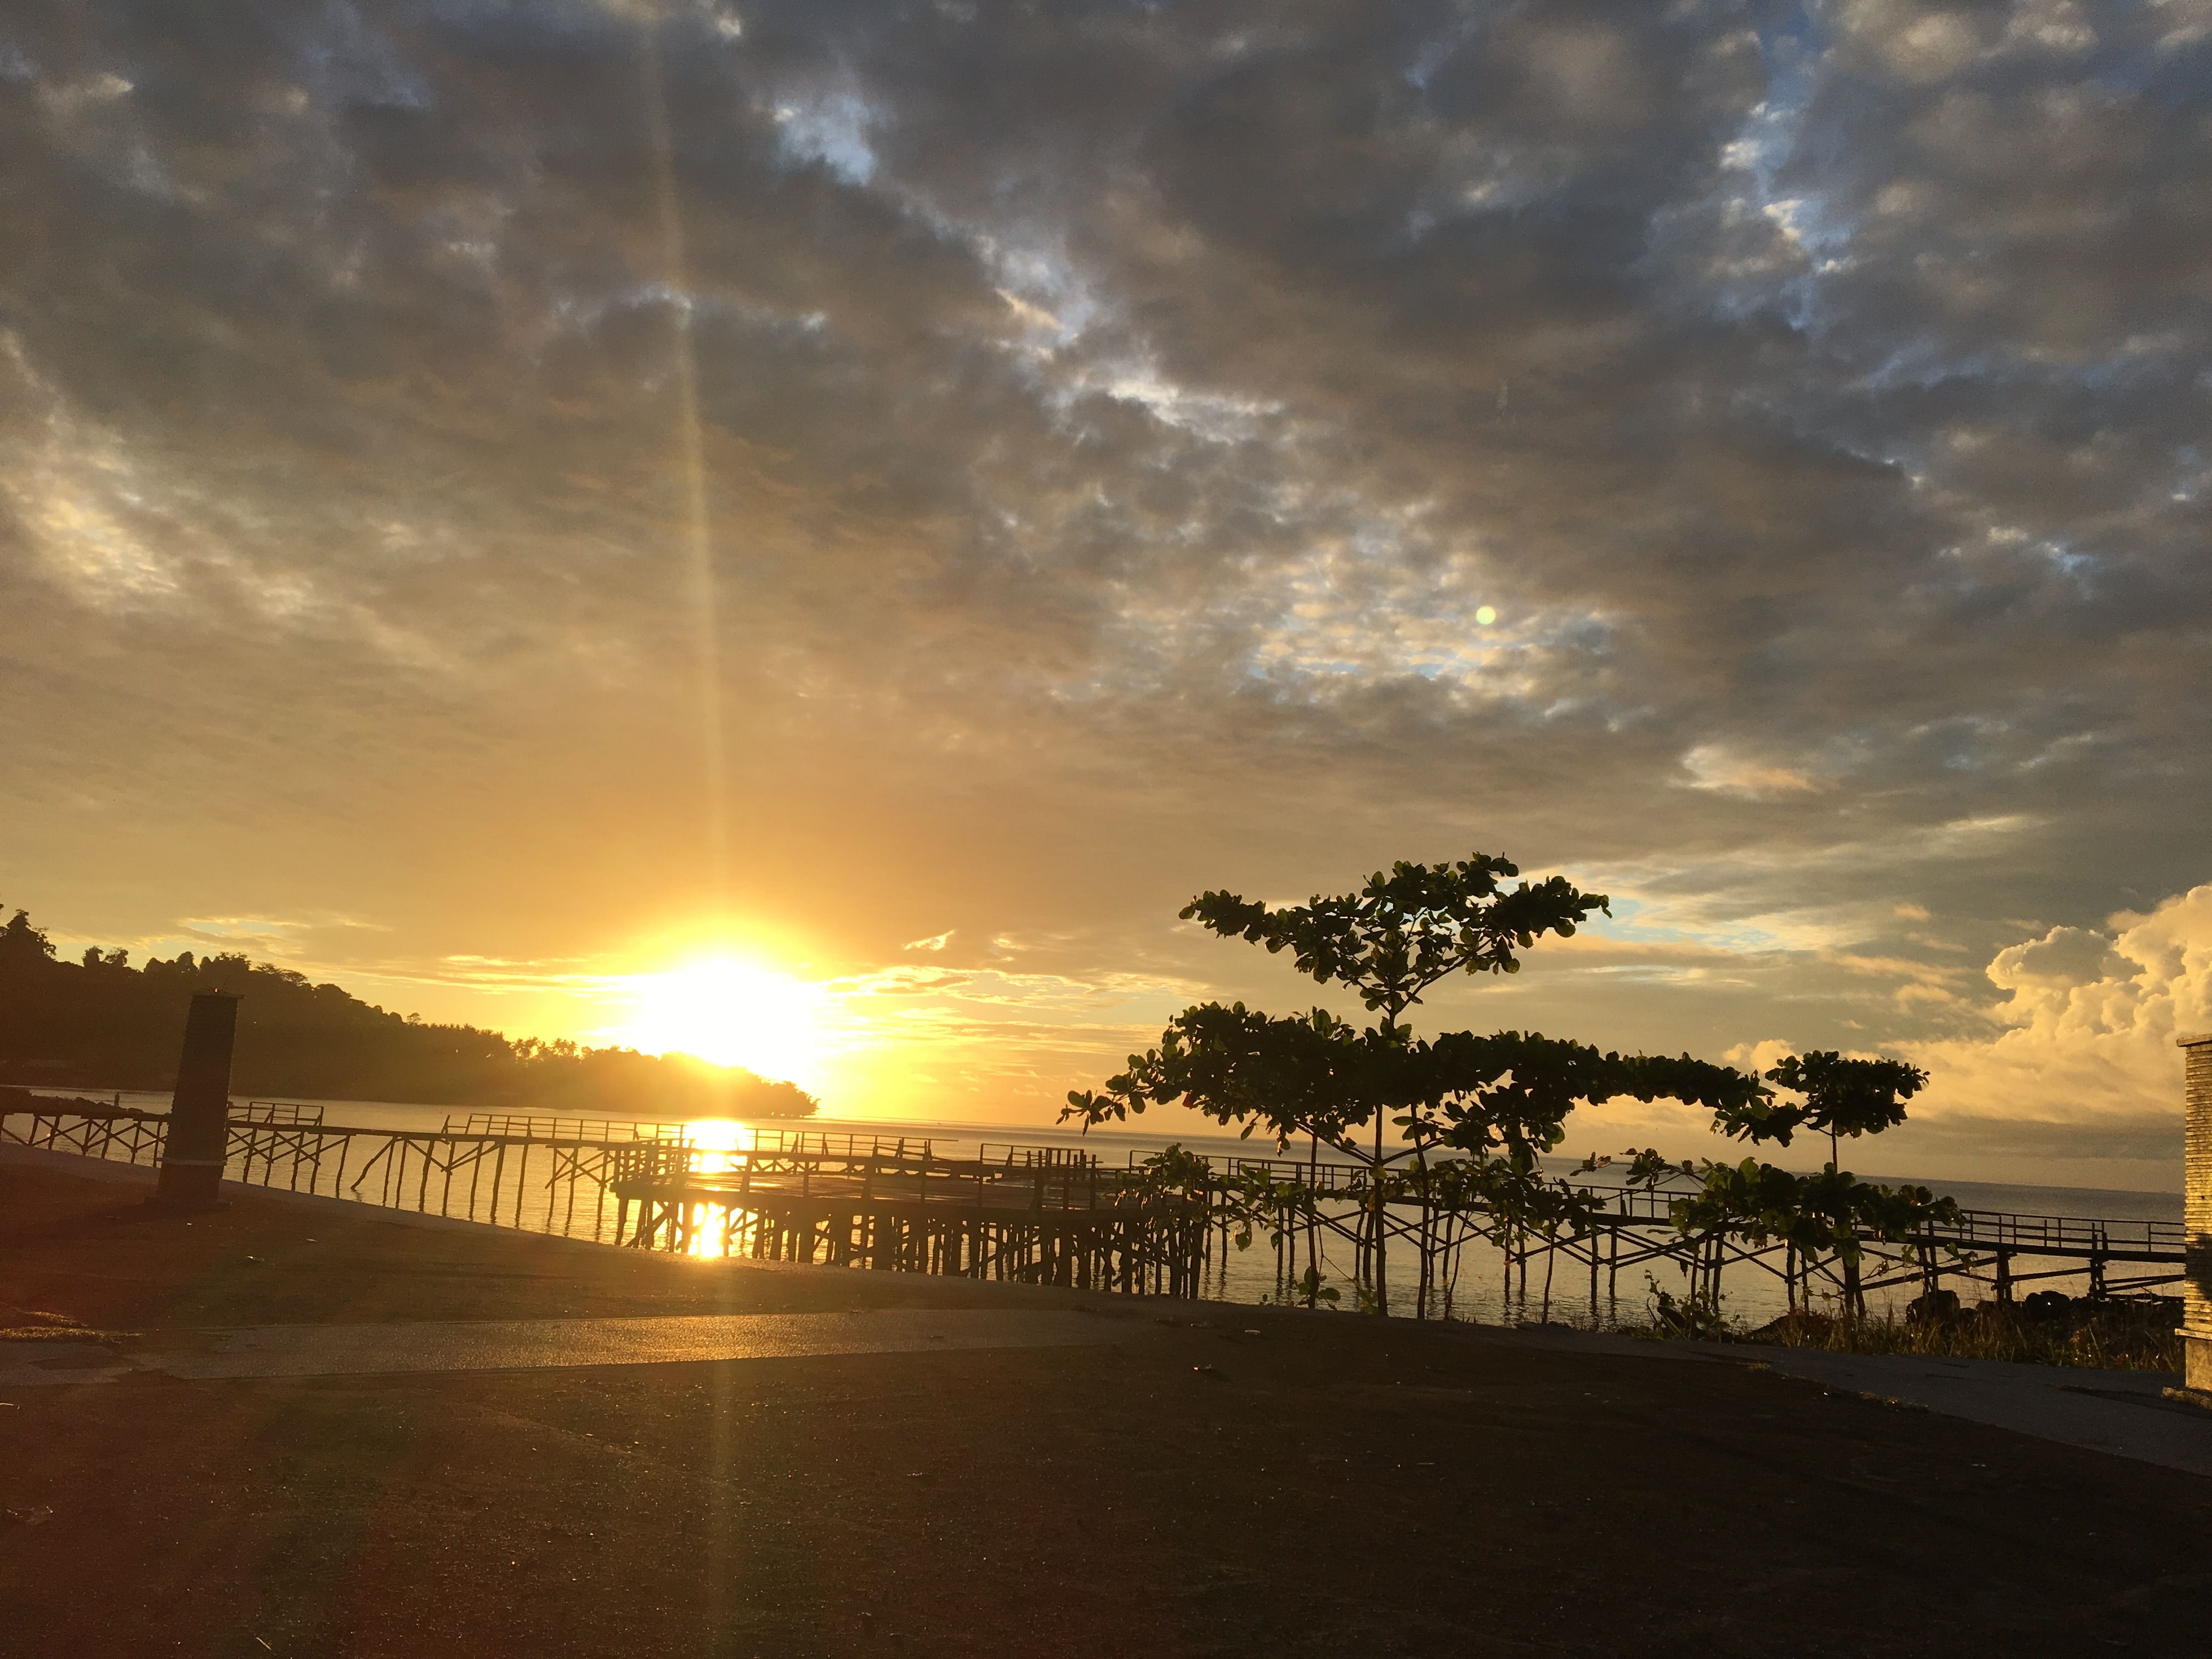 Sunrise Raja Ampat Islands. By’ Lera76